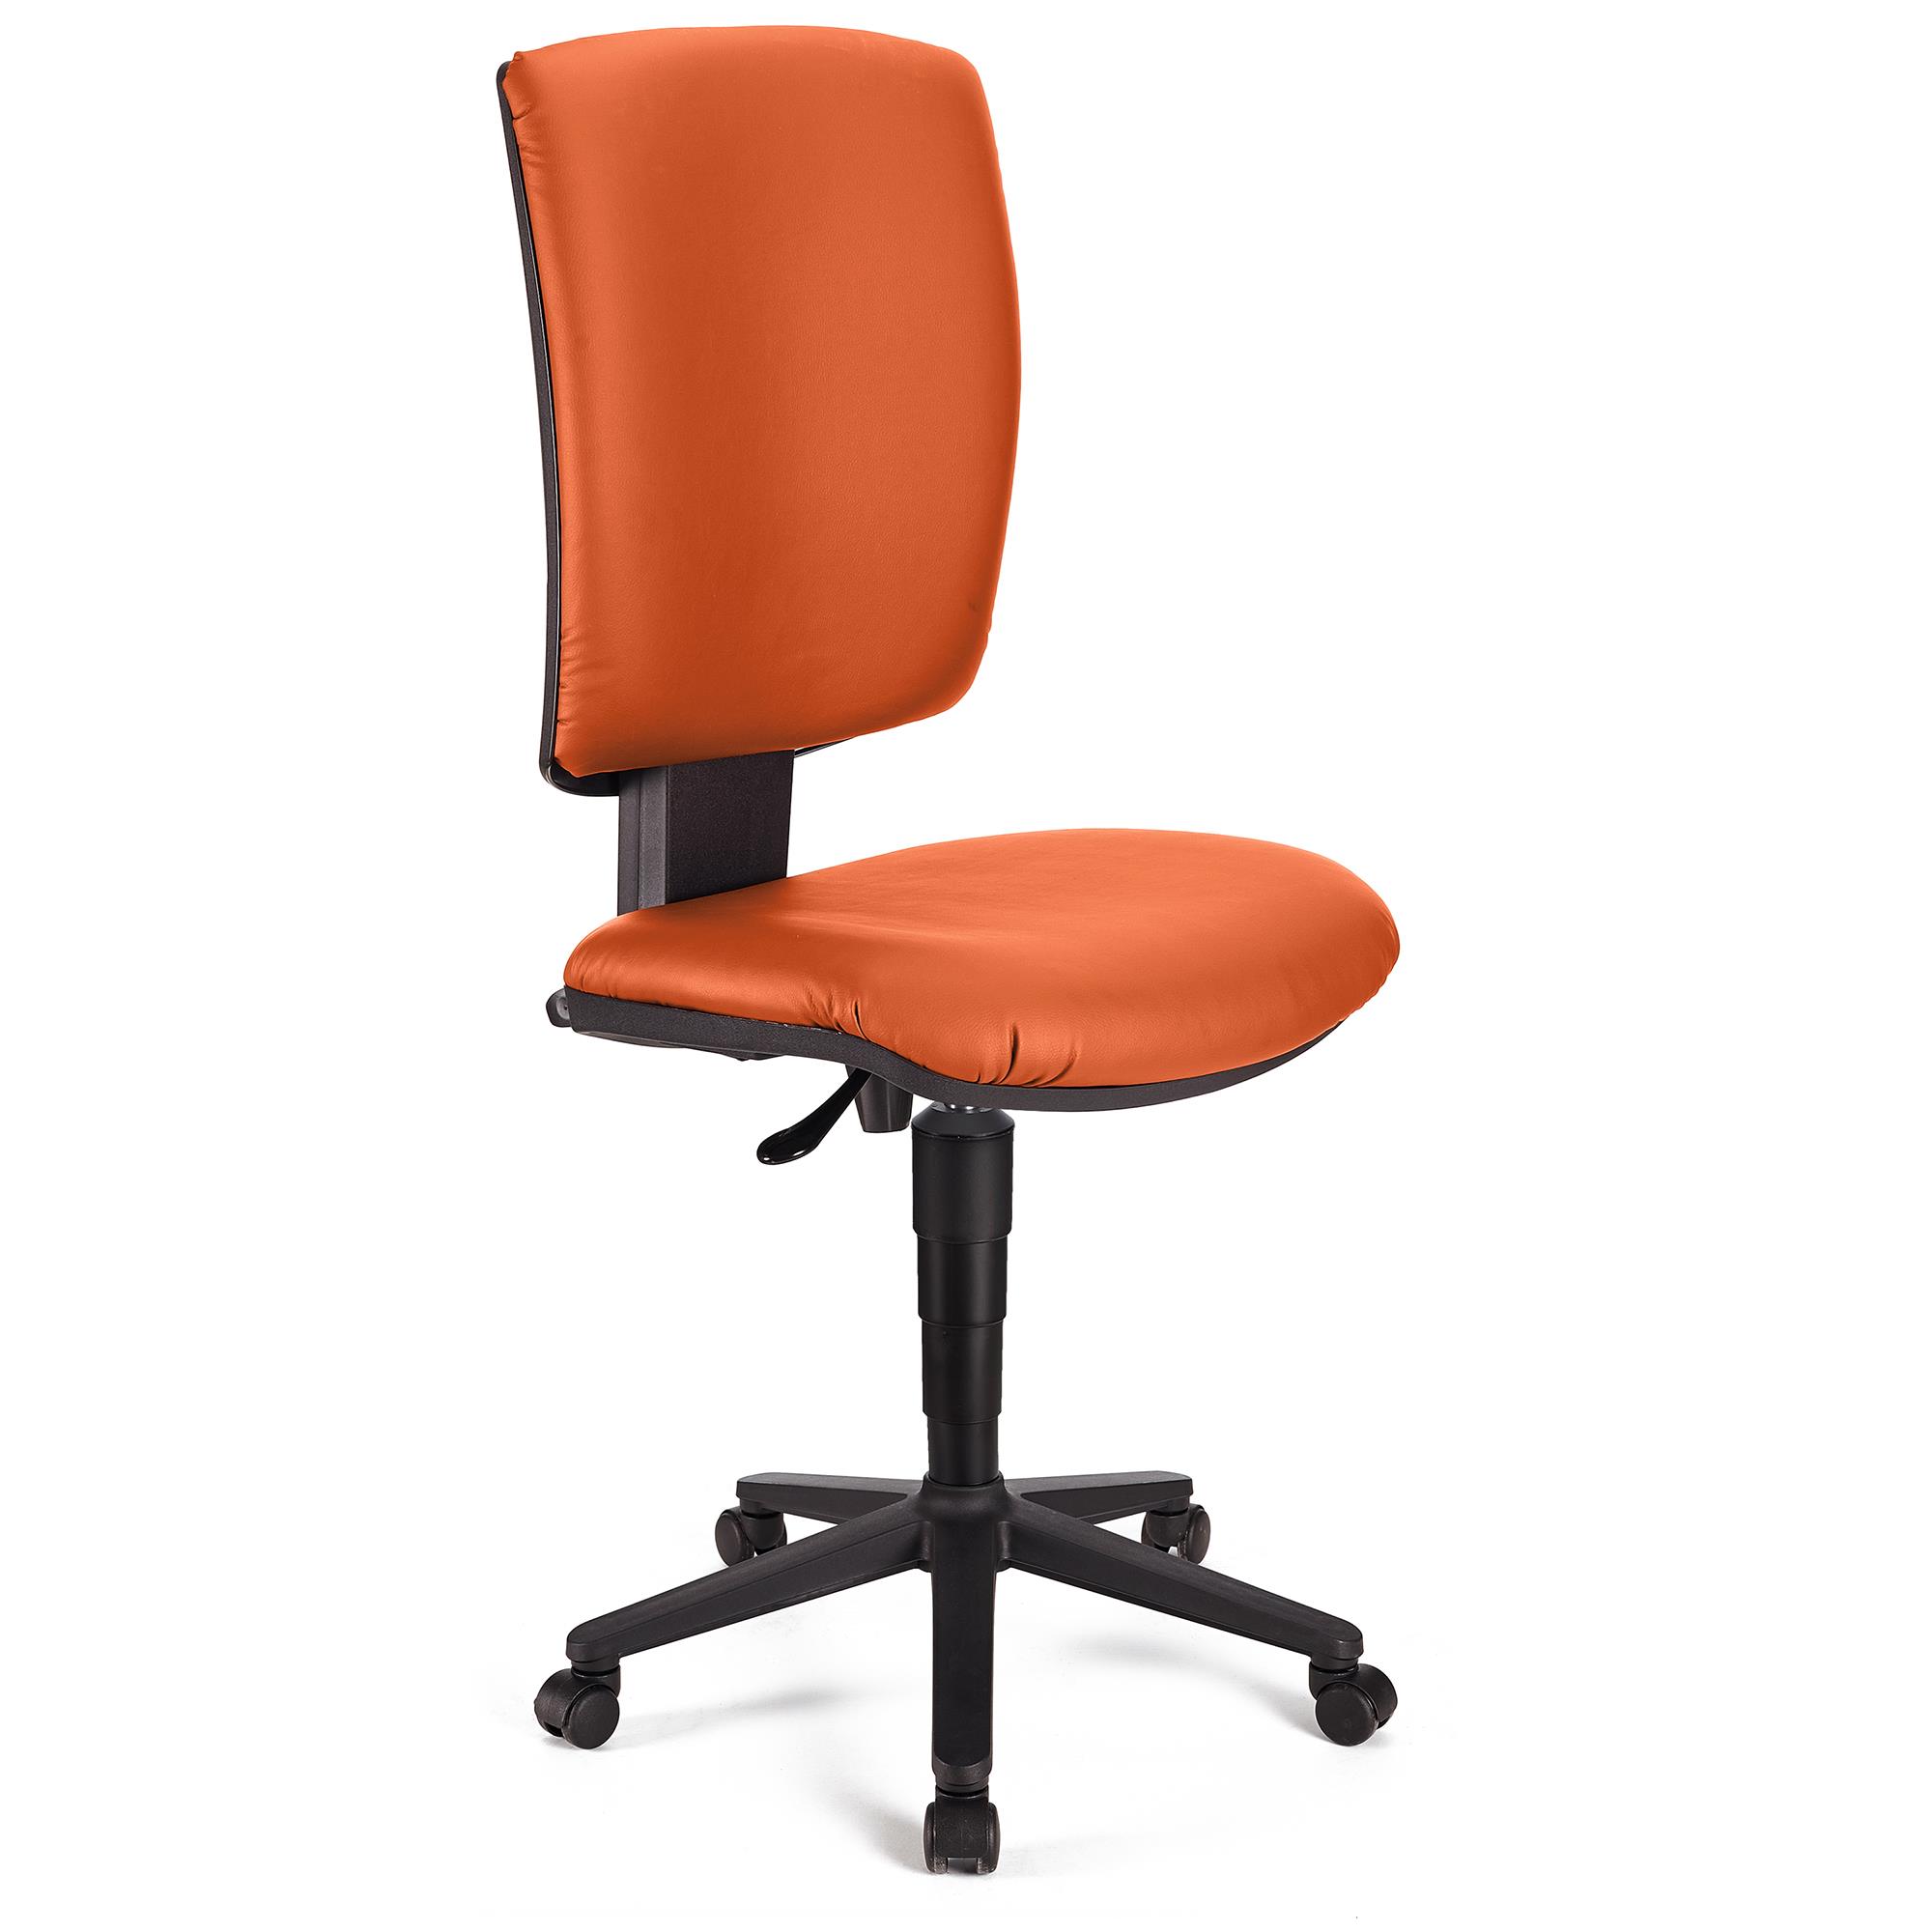 Bürostuhl ATLAS OHNE ARMLEHNEN LEDER, verstellbare Rückenlehne, dicke Polsterung, Farbe Orange